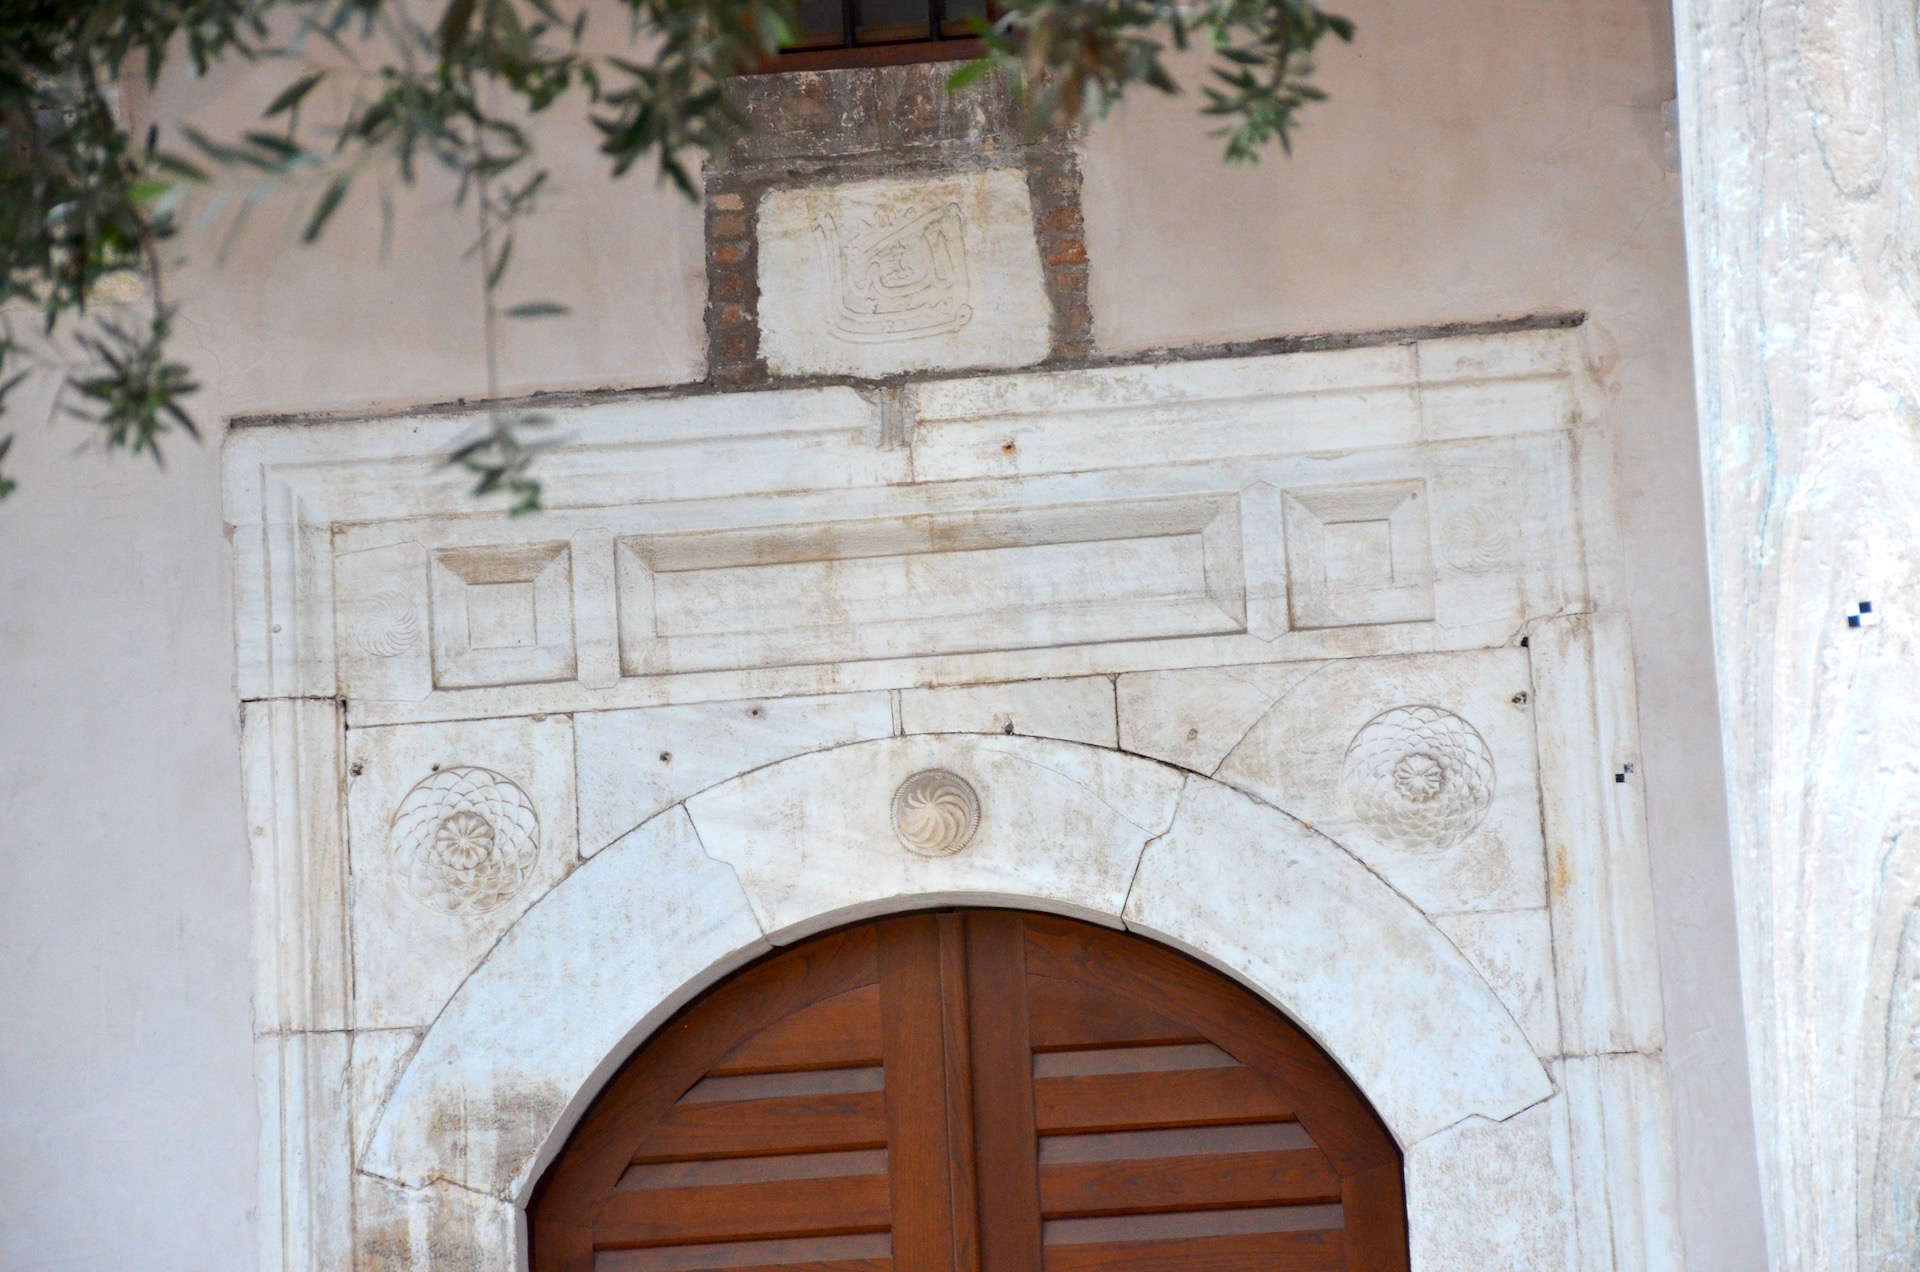 Entrance portal of the Fethiye Mosque at the Roman Agora in Athens, Greece